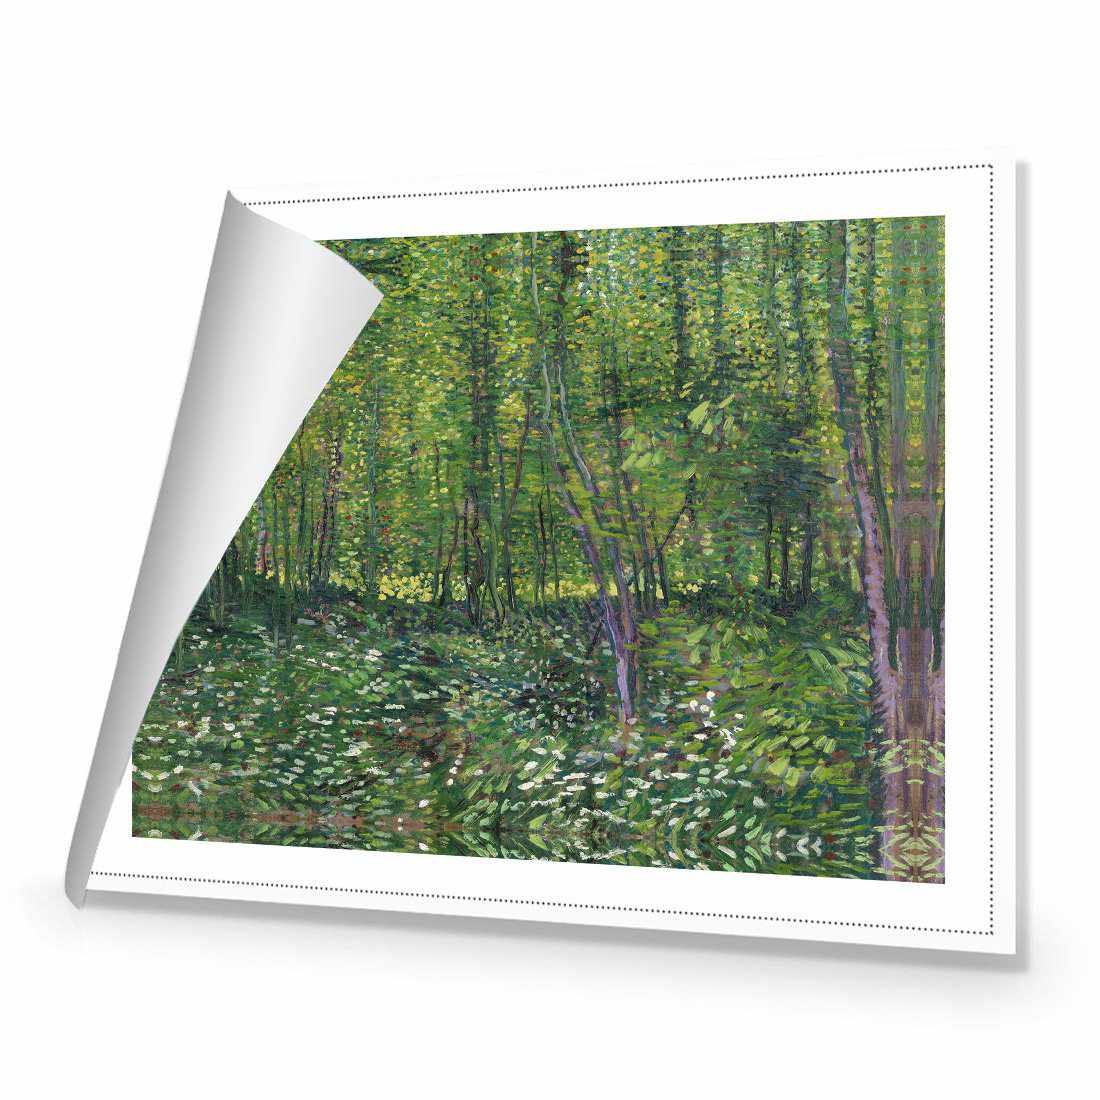 Trees And Undergrowth - Van Gogh Canvas Art-Canvas-Wall Art Designs-45x30cm-Rolled Canvas-Wall Art Designs